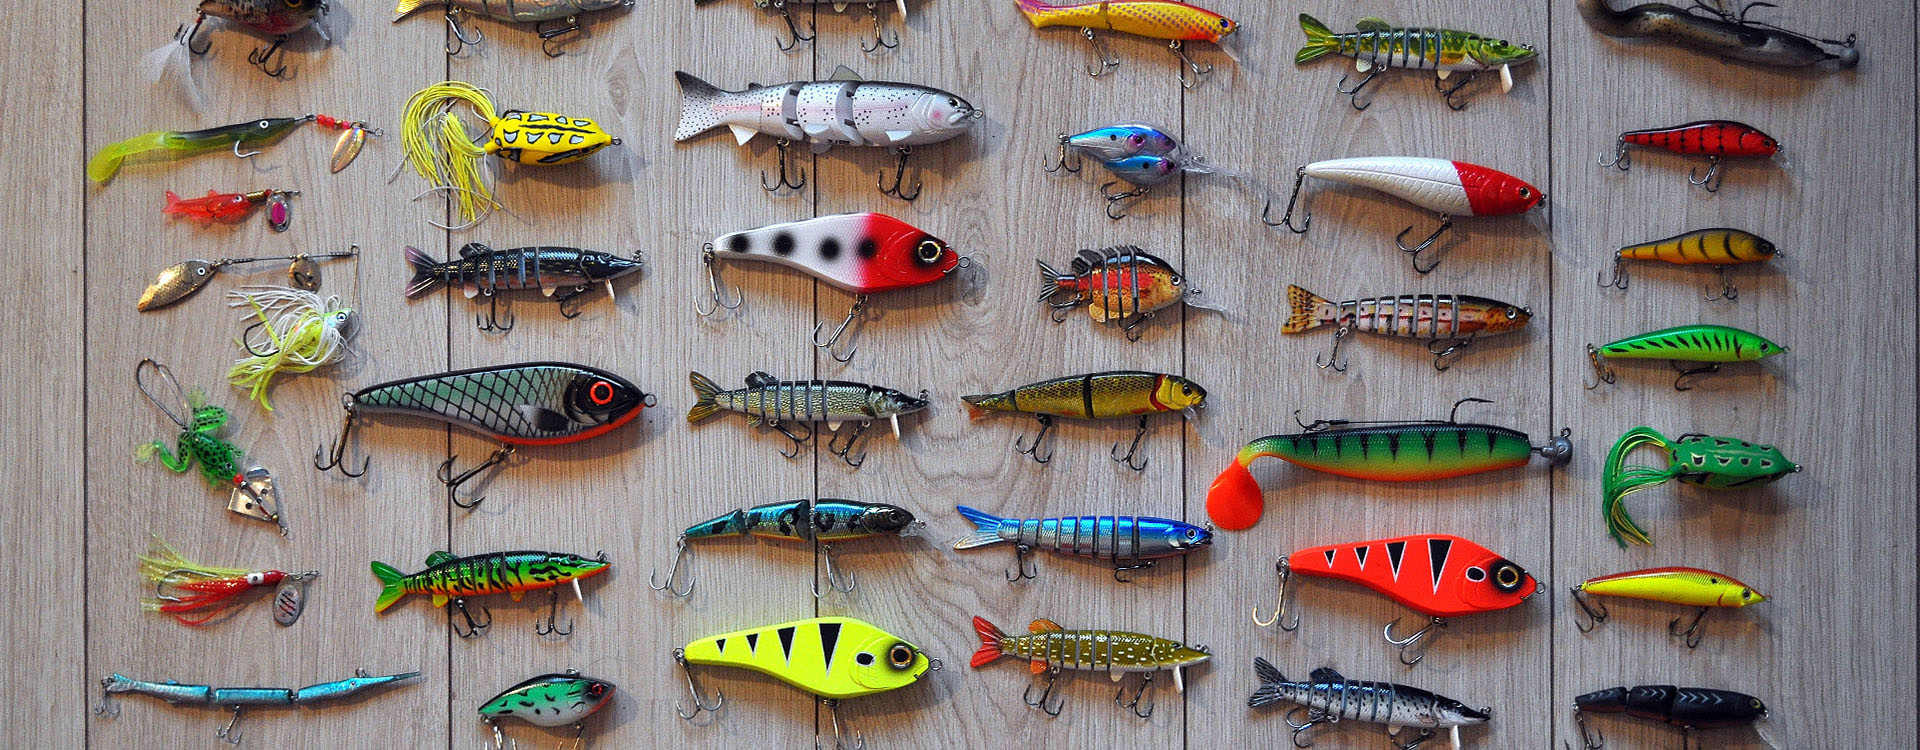 Does fake fishing bait work? - Quora